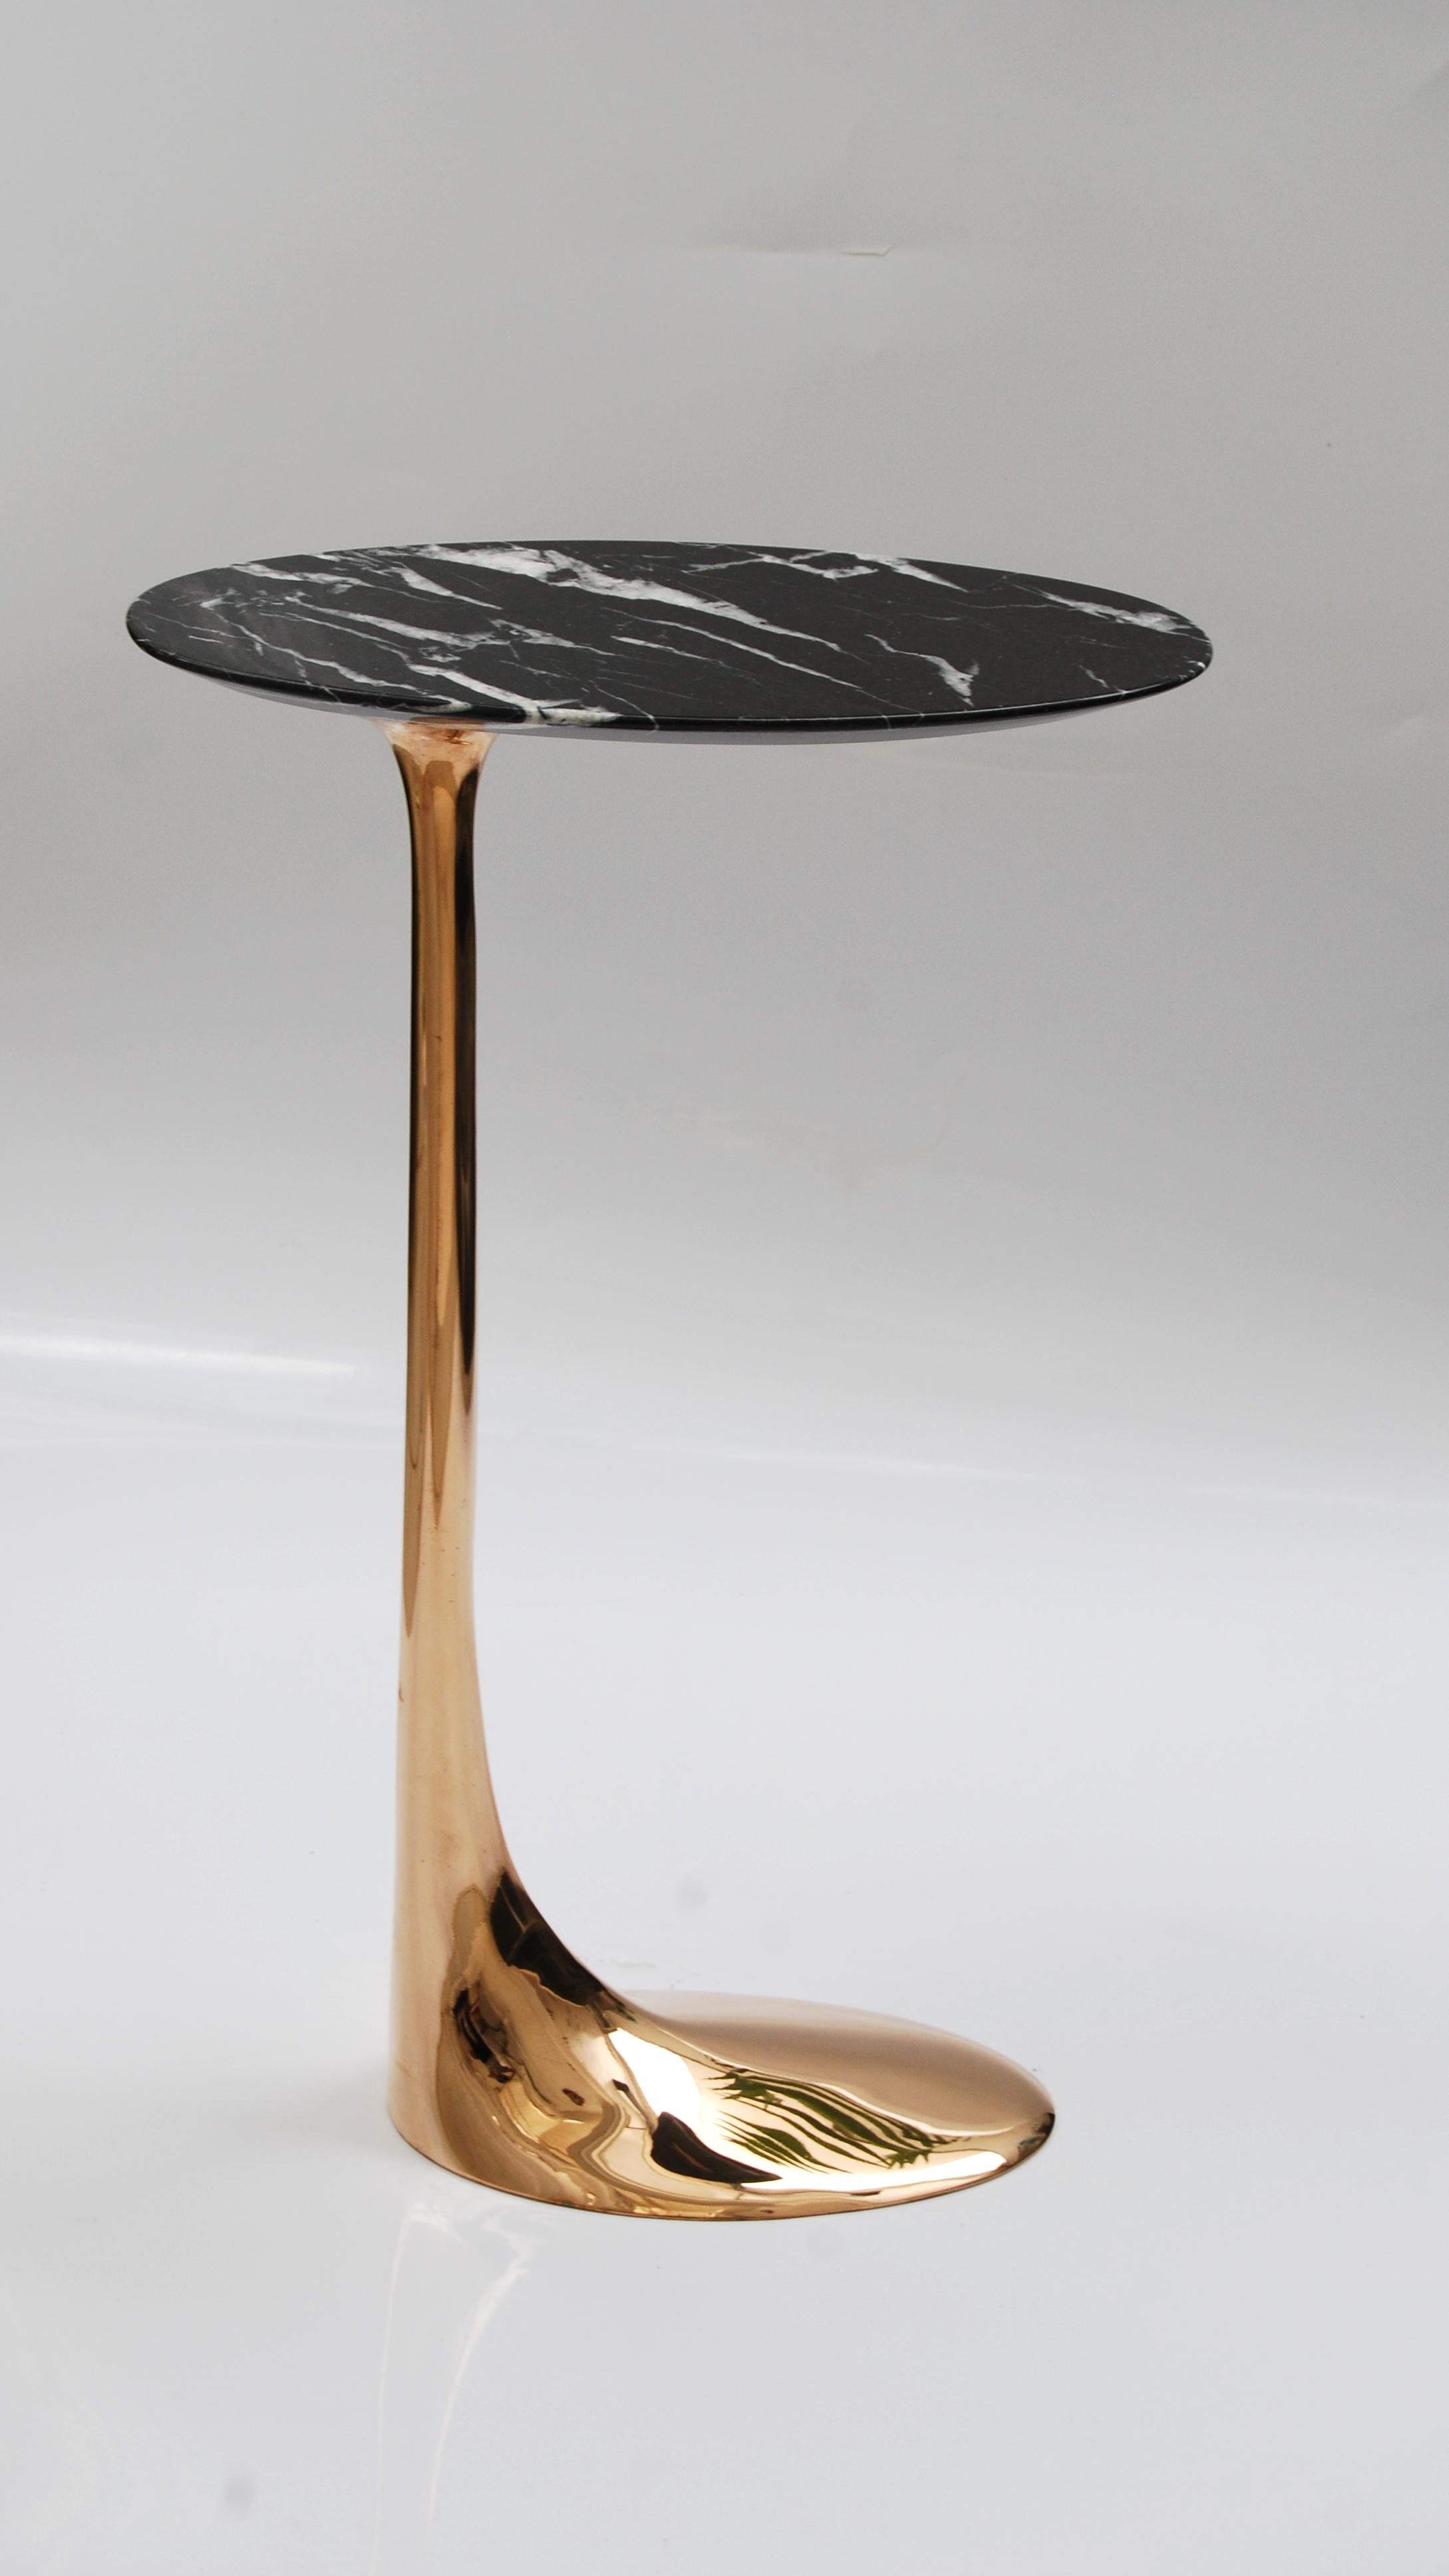 Table en bronze poli avec plateau en marbre Marquina par Fakasaka Design
Dimensions : L 18 x P 38 x H 62 cm
Matériaux : bronze poli, marbre Nero Marquina.

